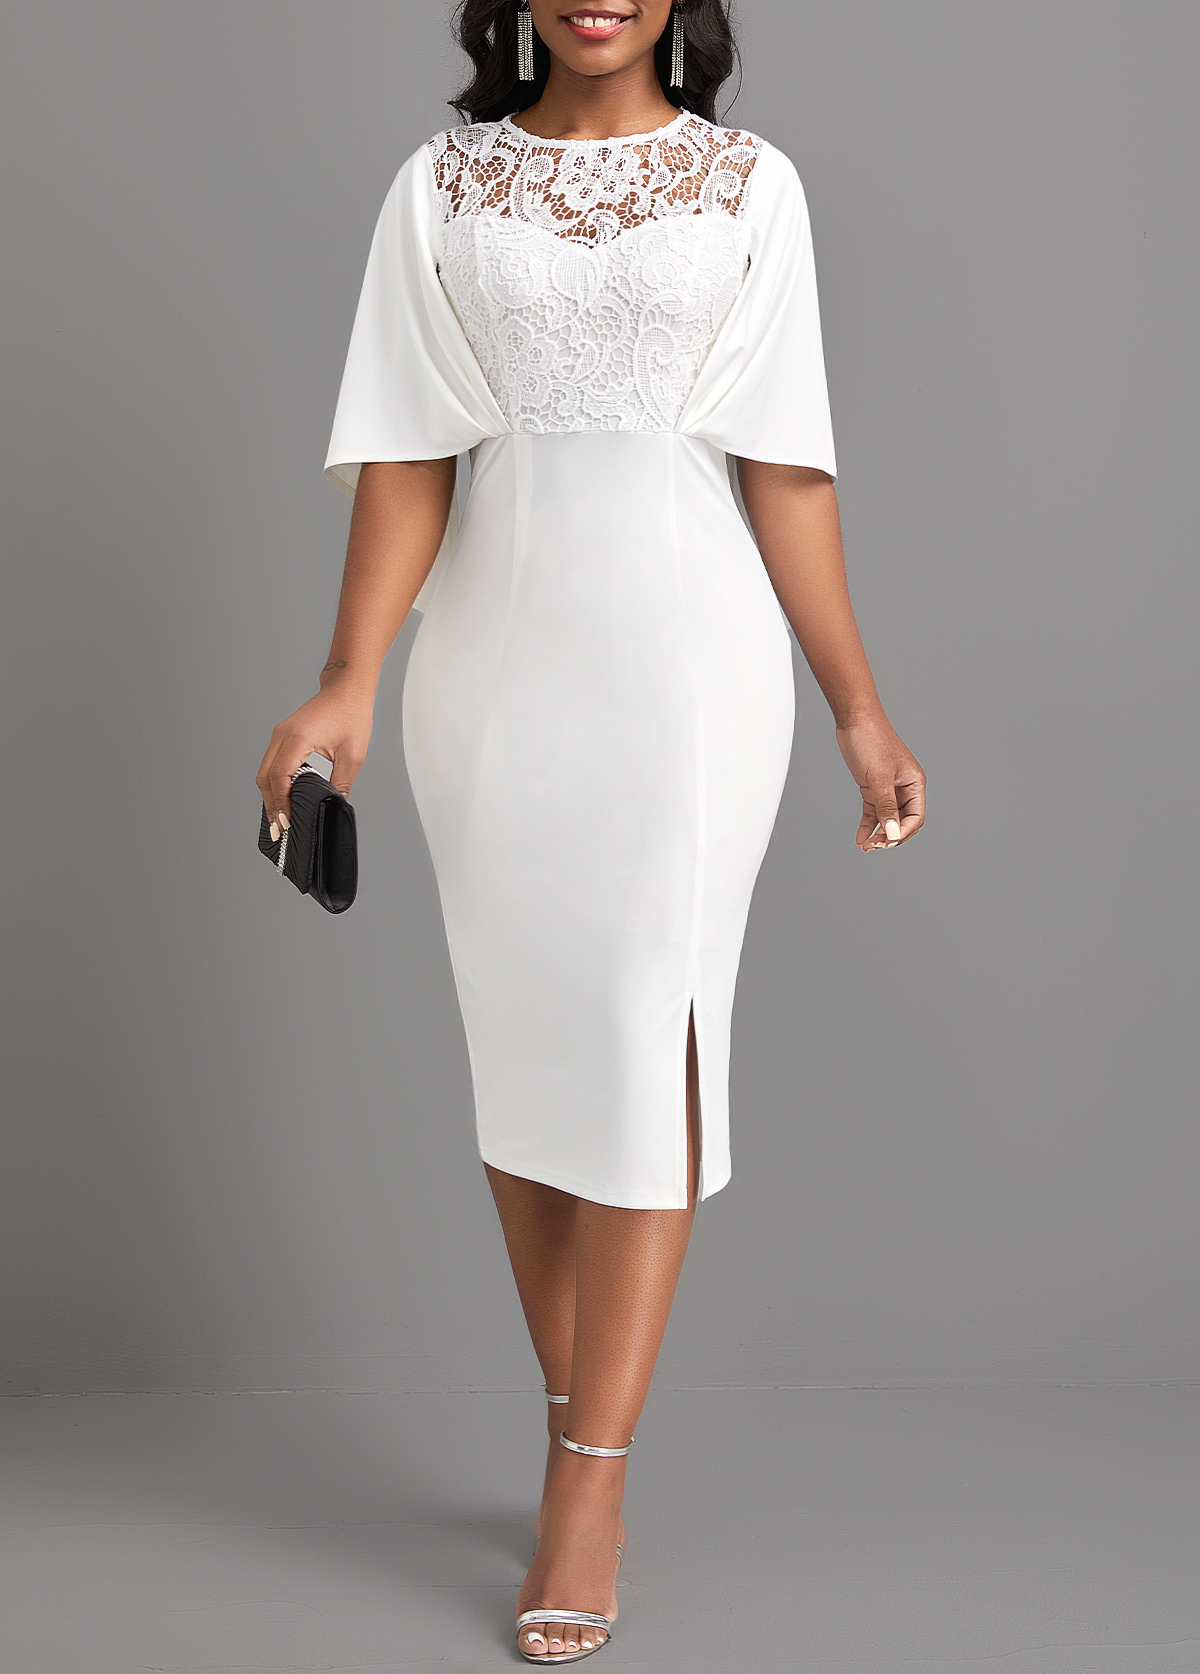 ROTITA Lace White Half Sleeve Bodycon Dress